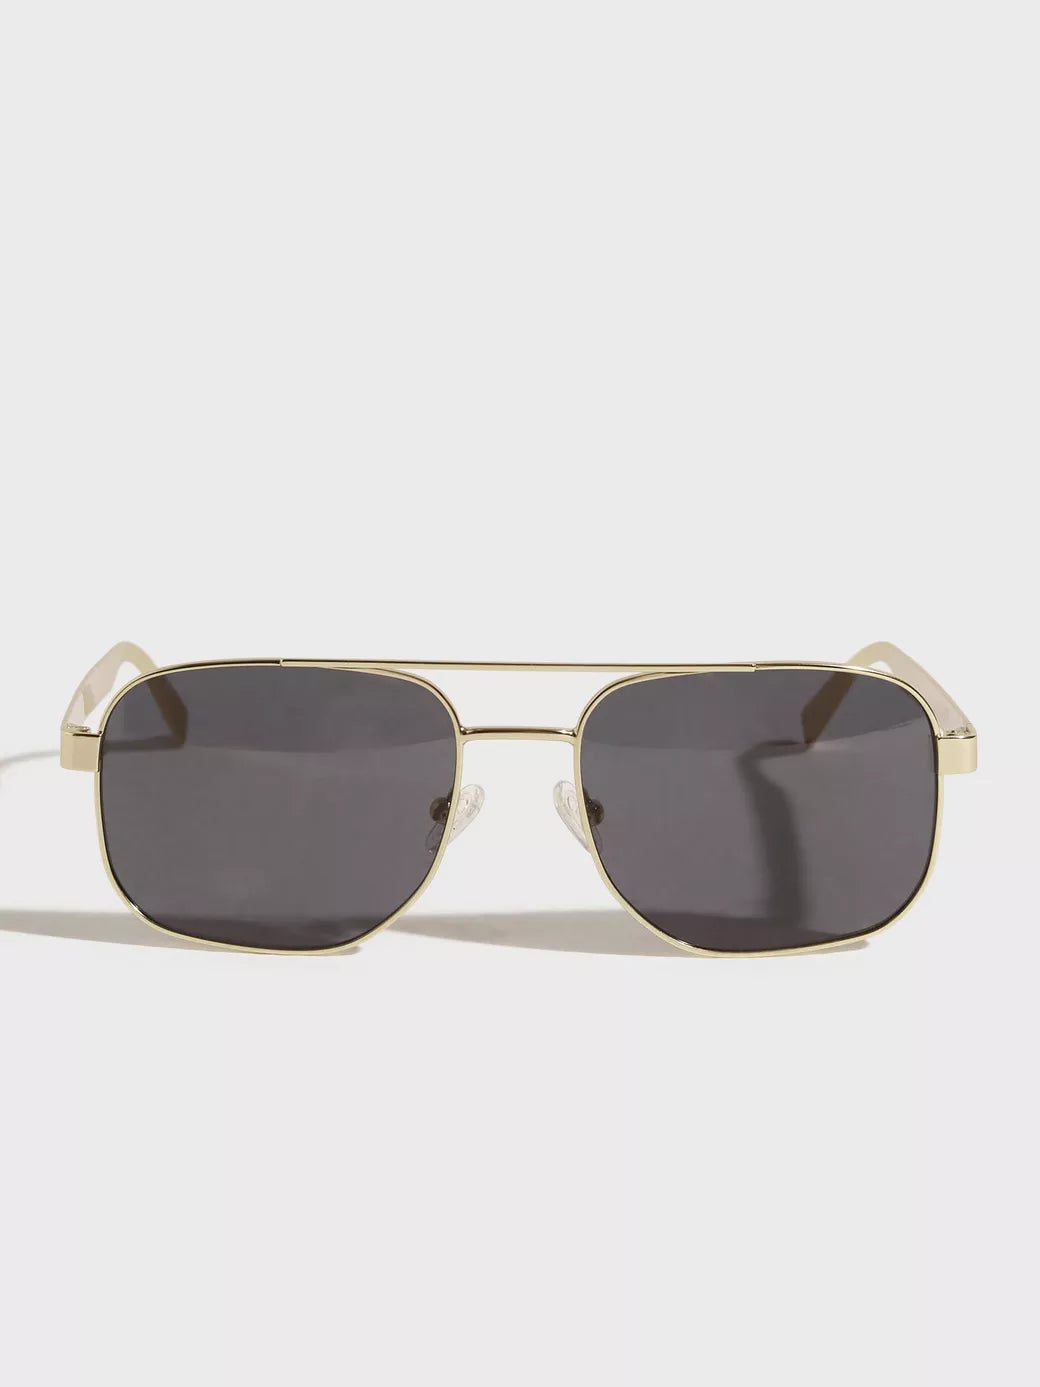 Sherman Sunglasses - Gold